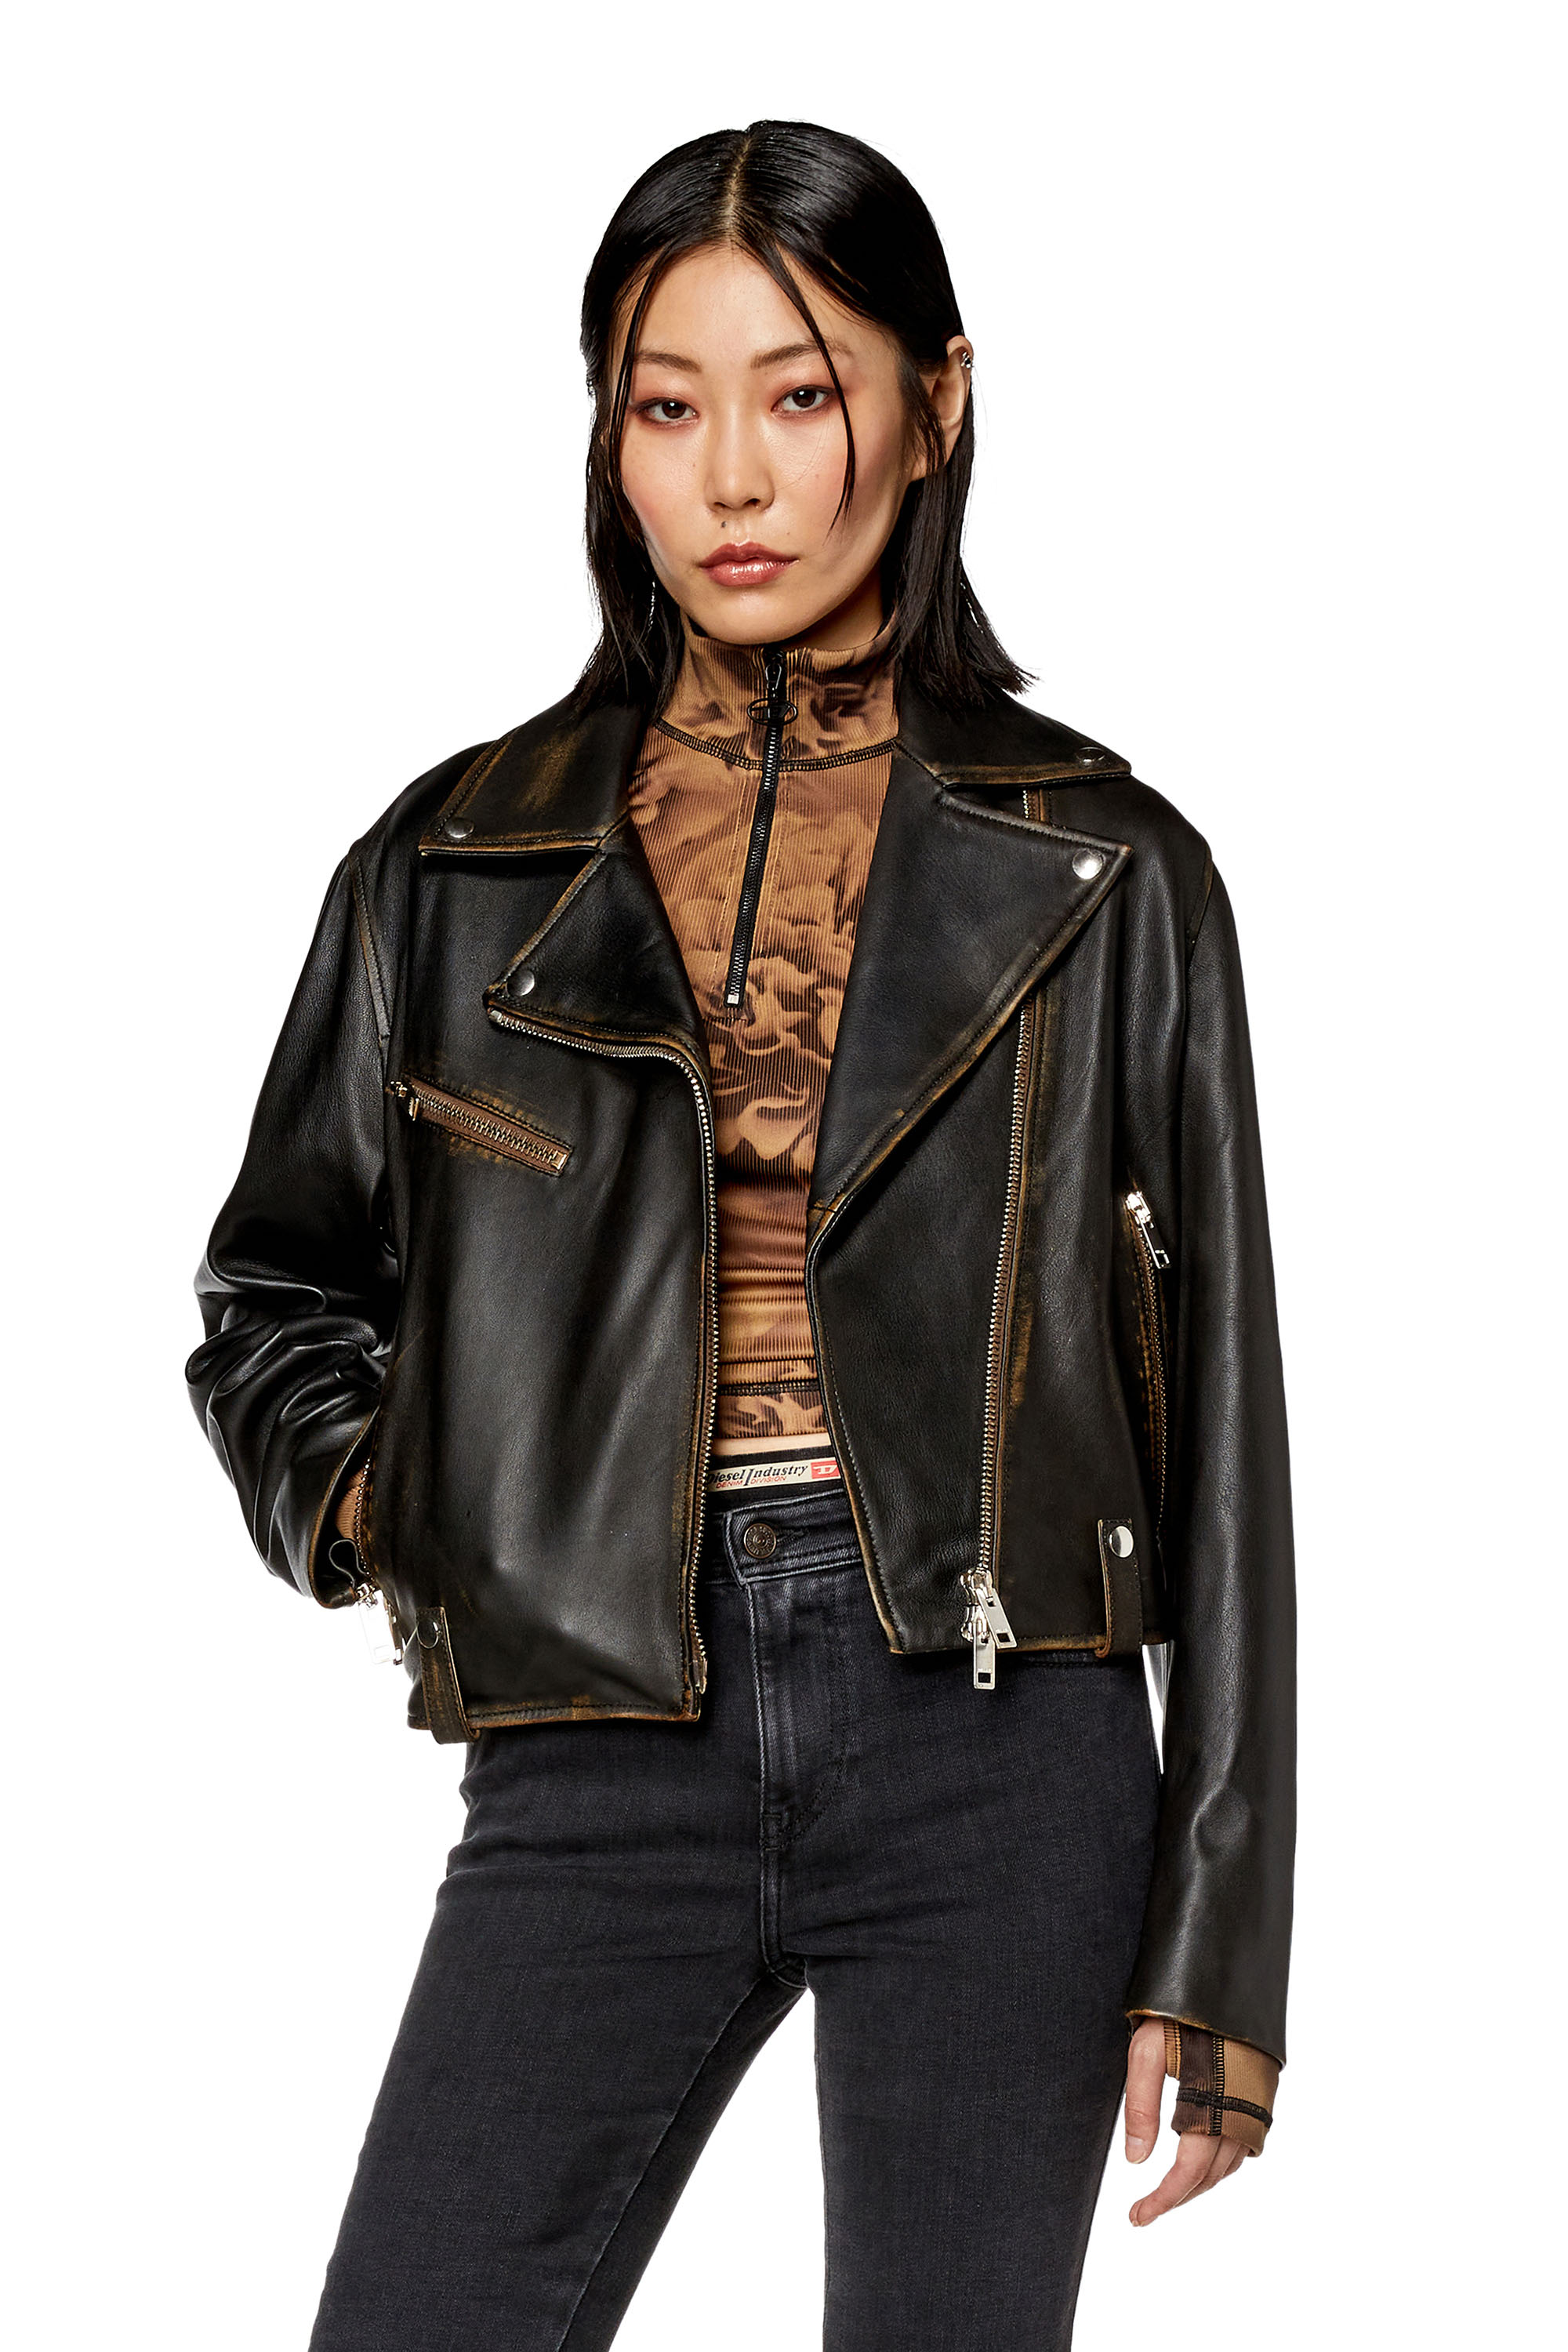 Women's Leather Jackets: Bomber, Biker, Nail